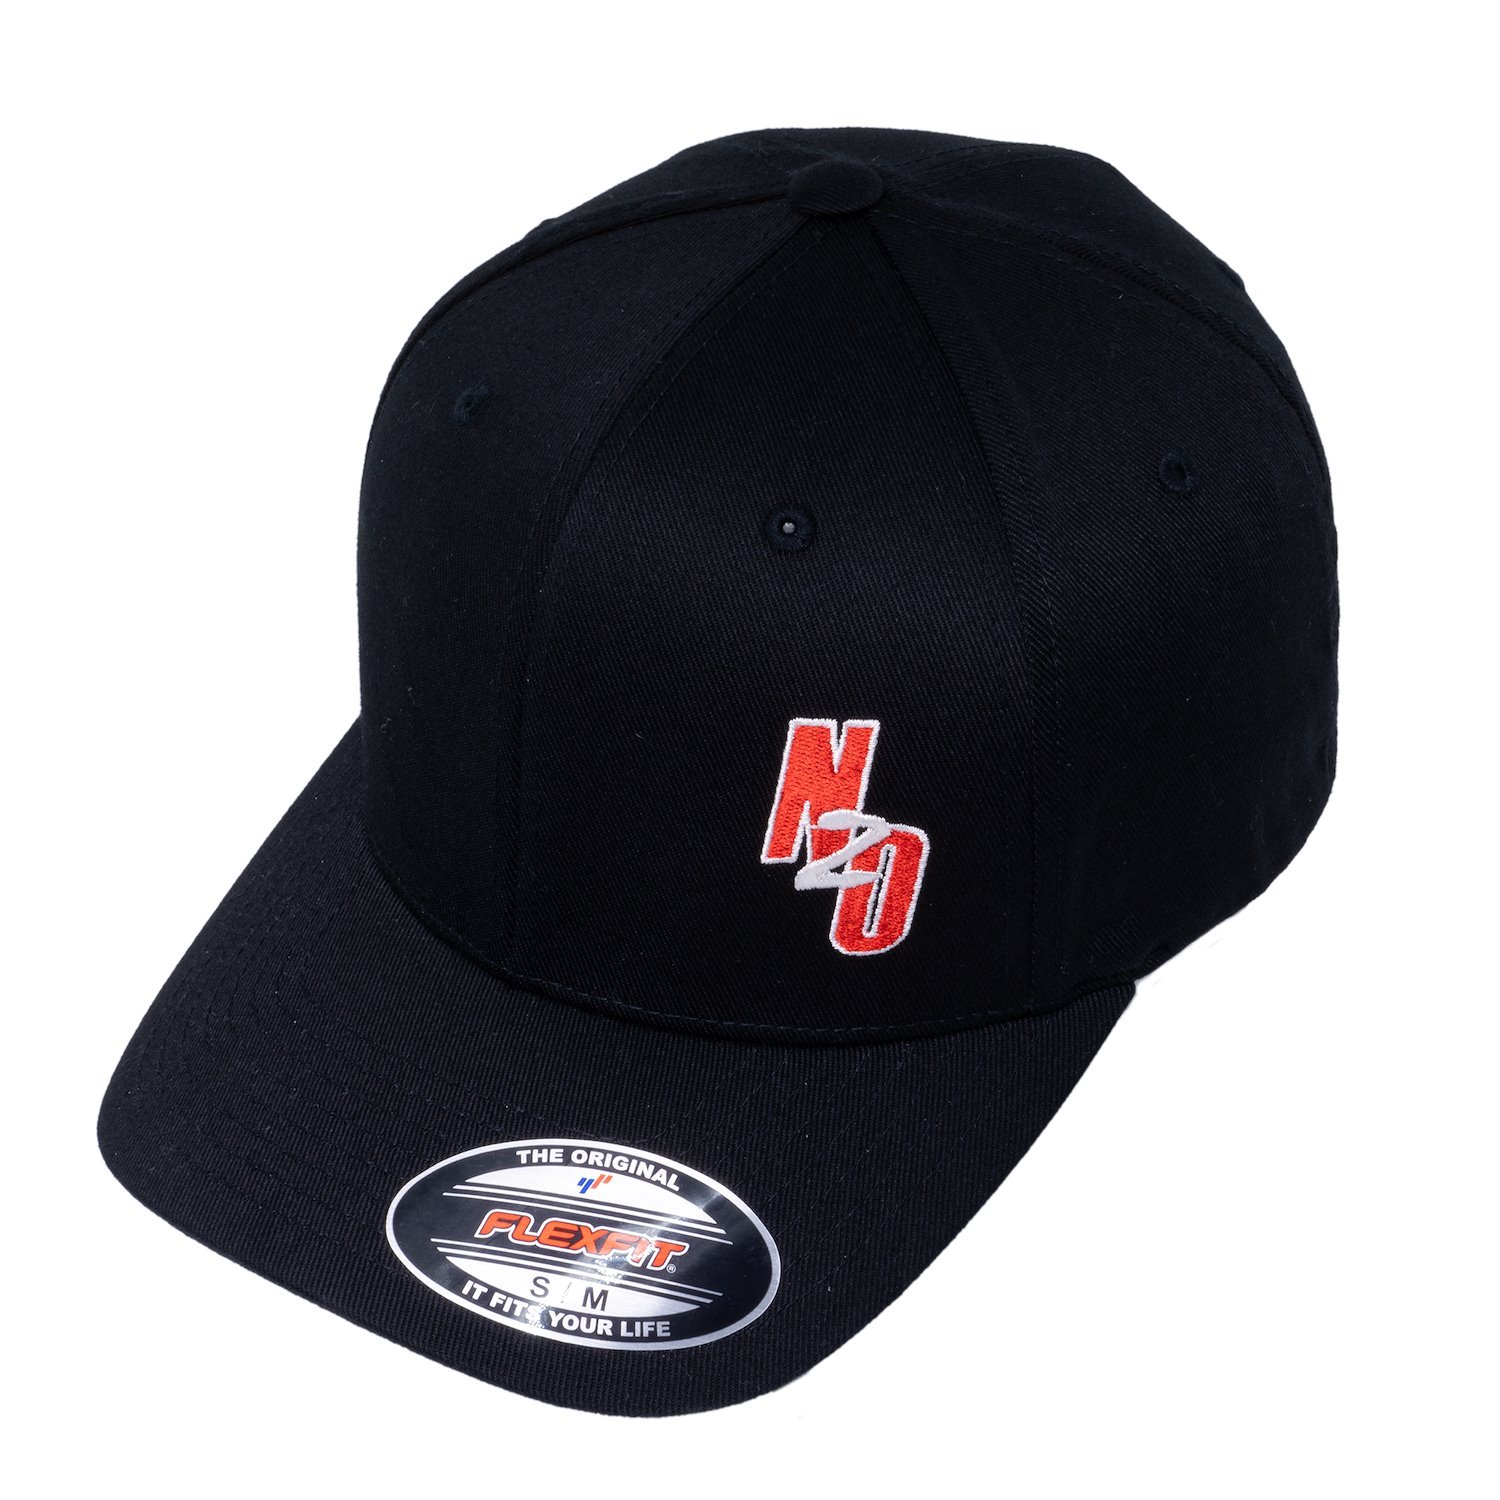 00-91027-S/M Flex Fit Hat, Small/Medium, Black/Traditional